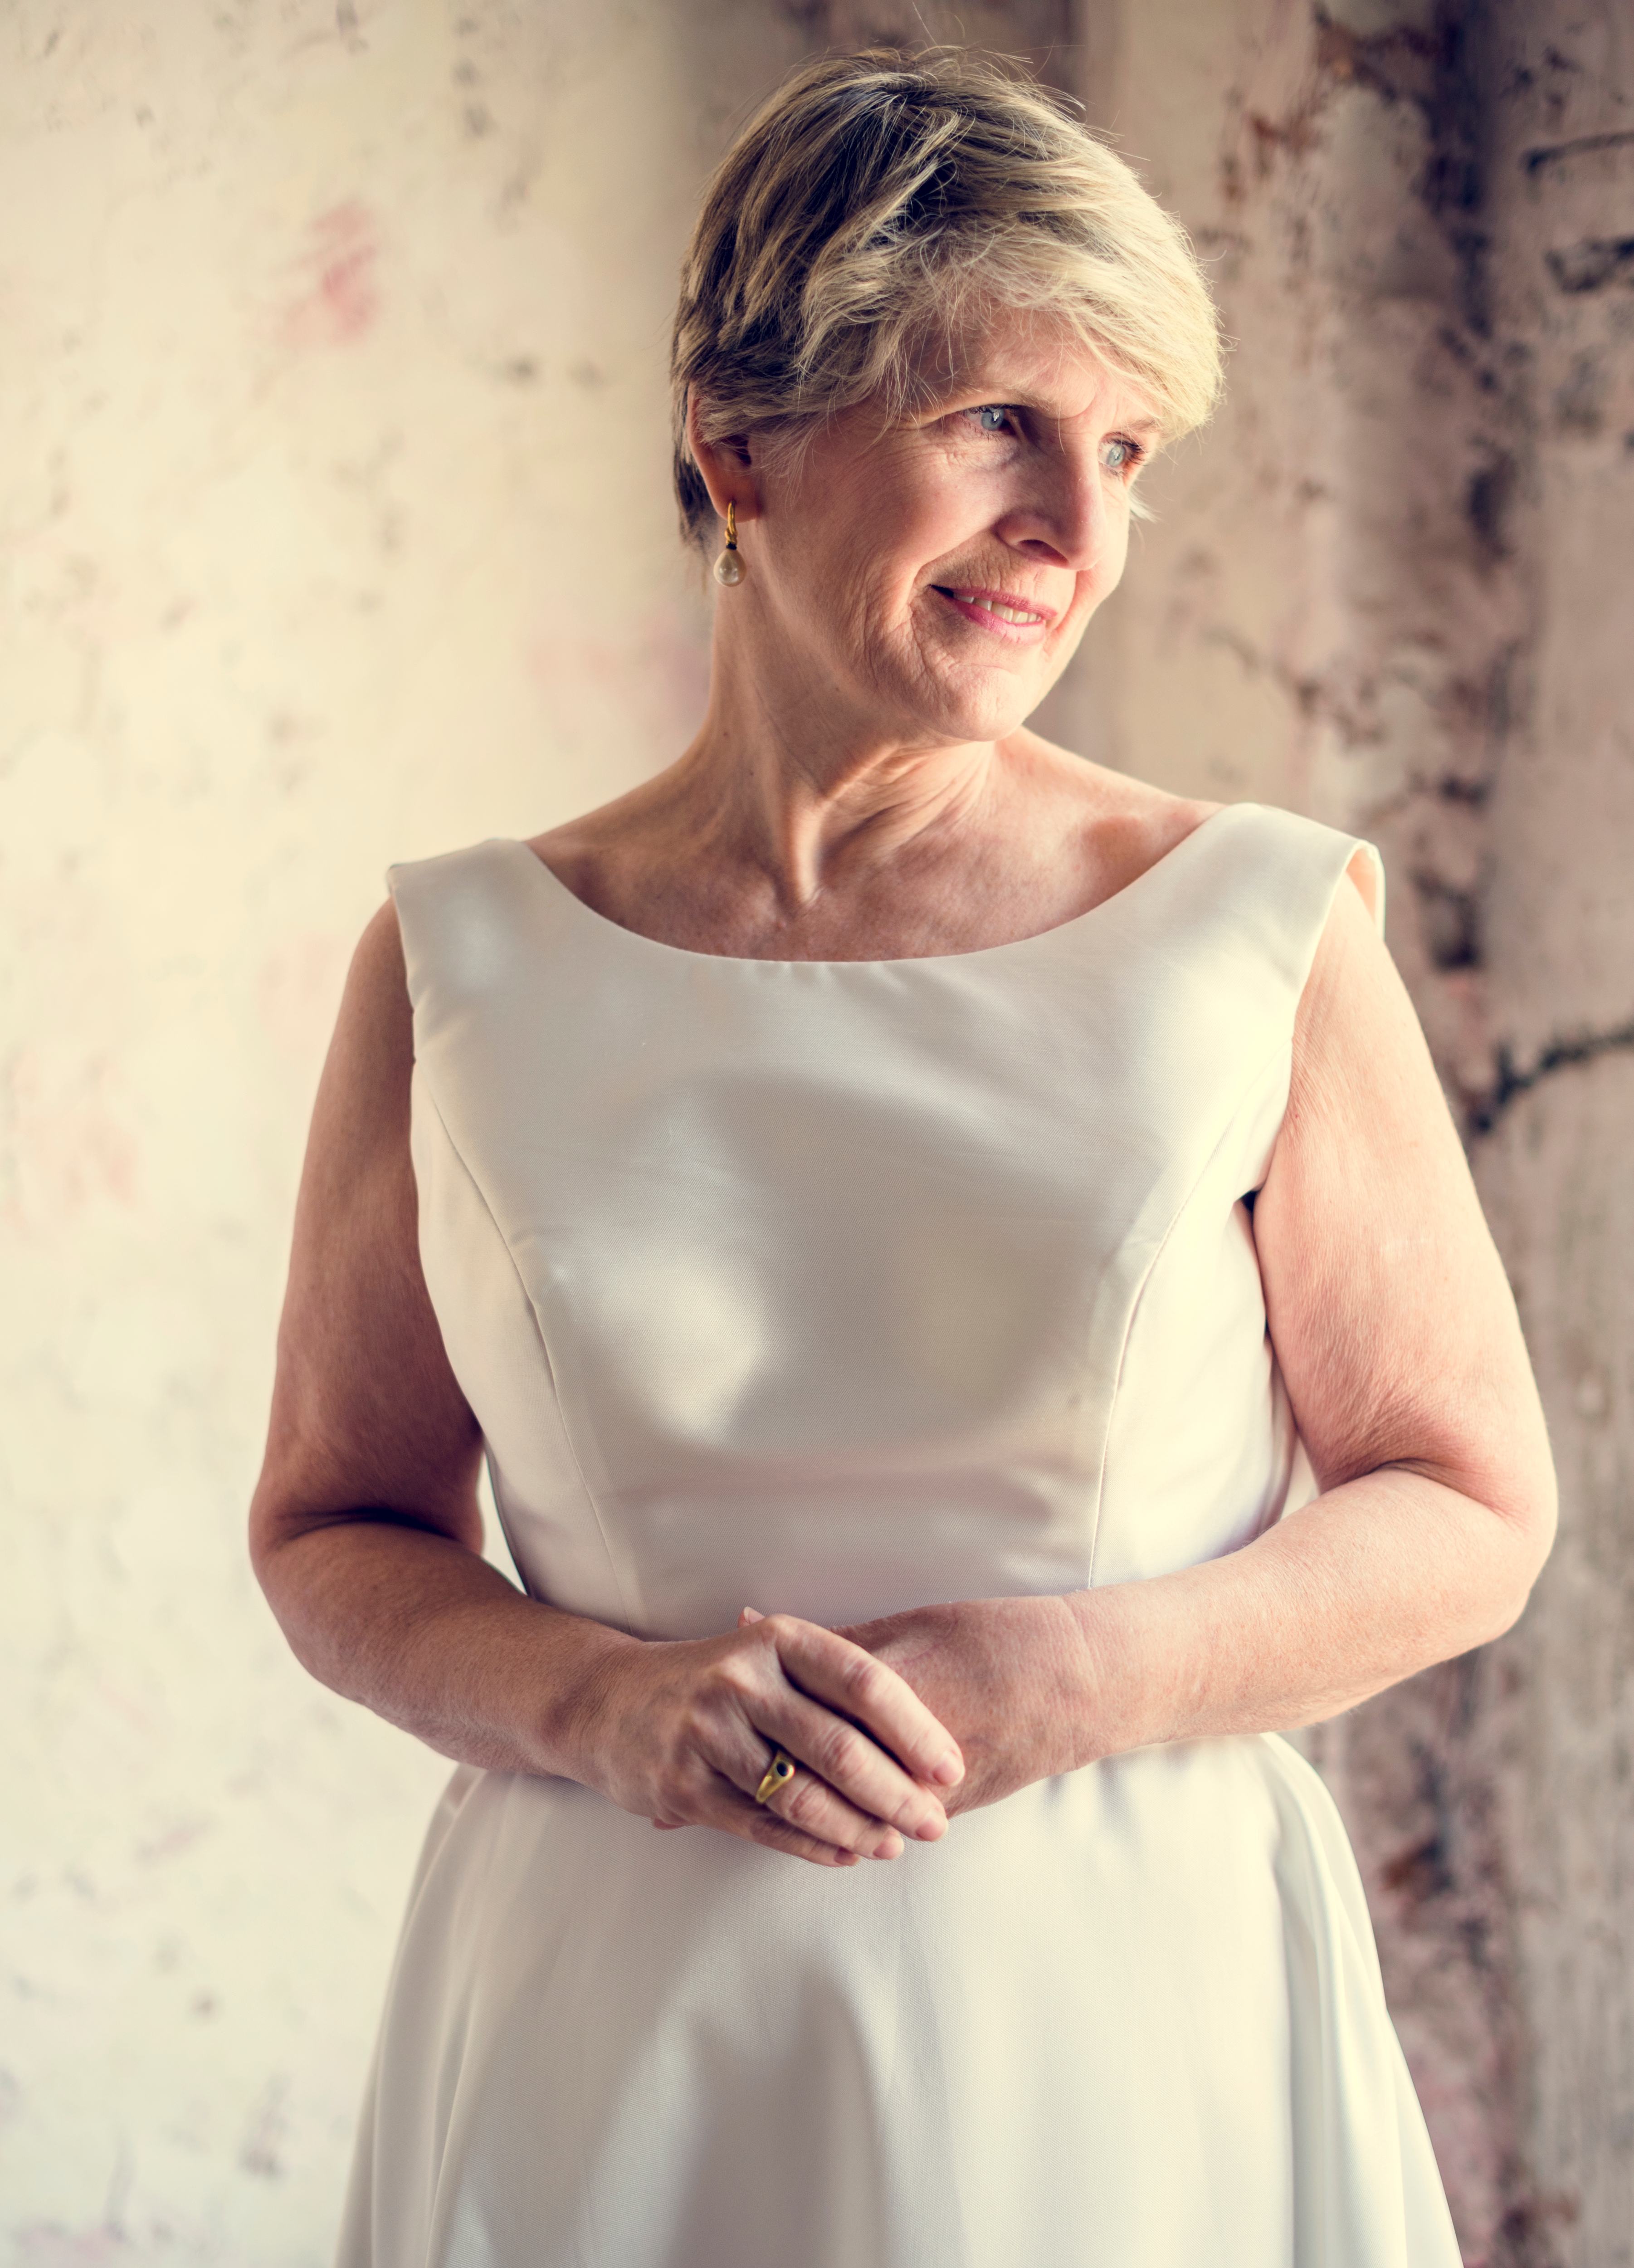 A senior woman in a white dress | Source: Shutterstock